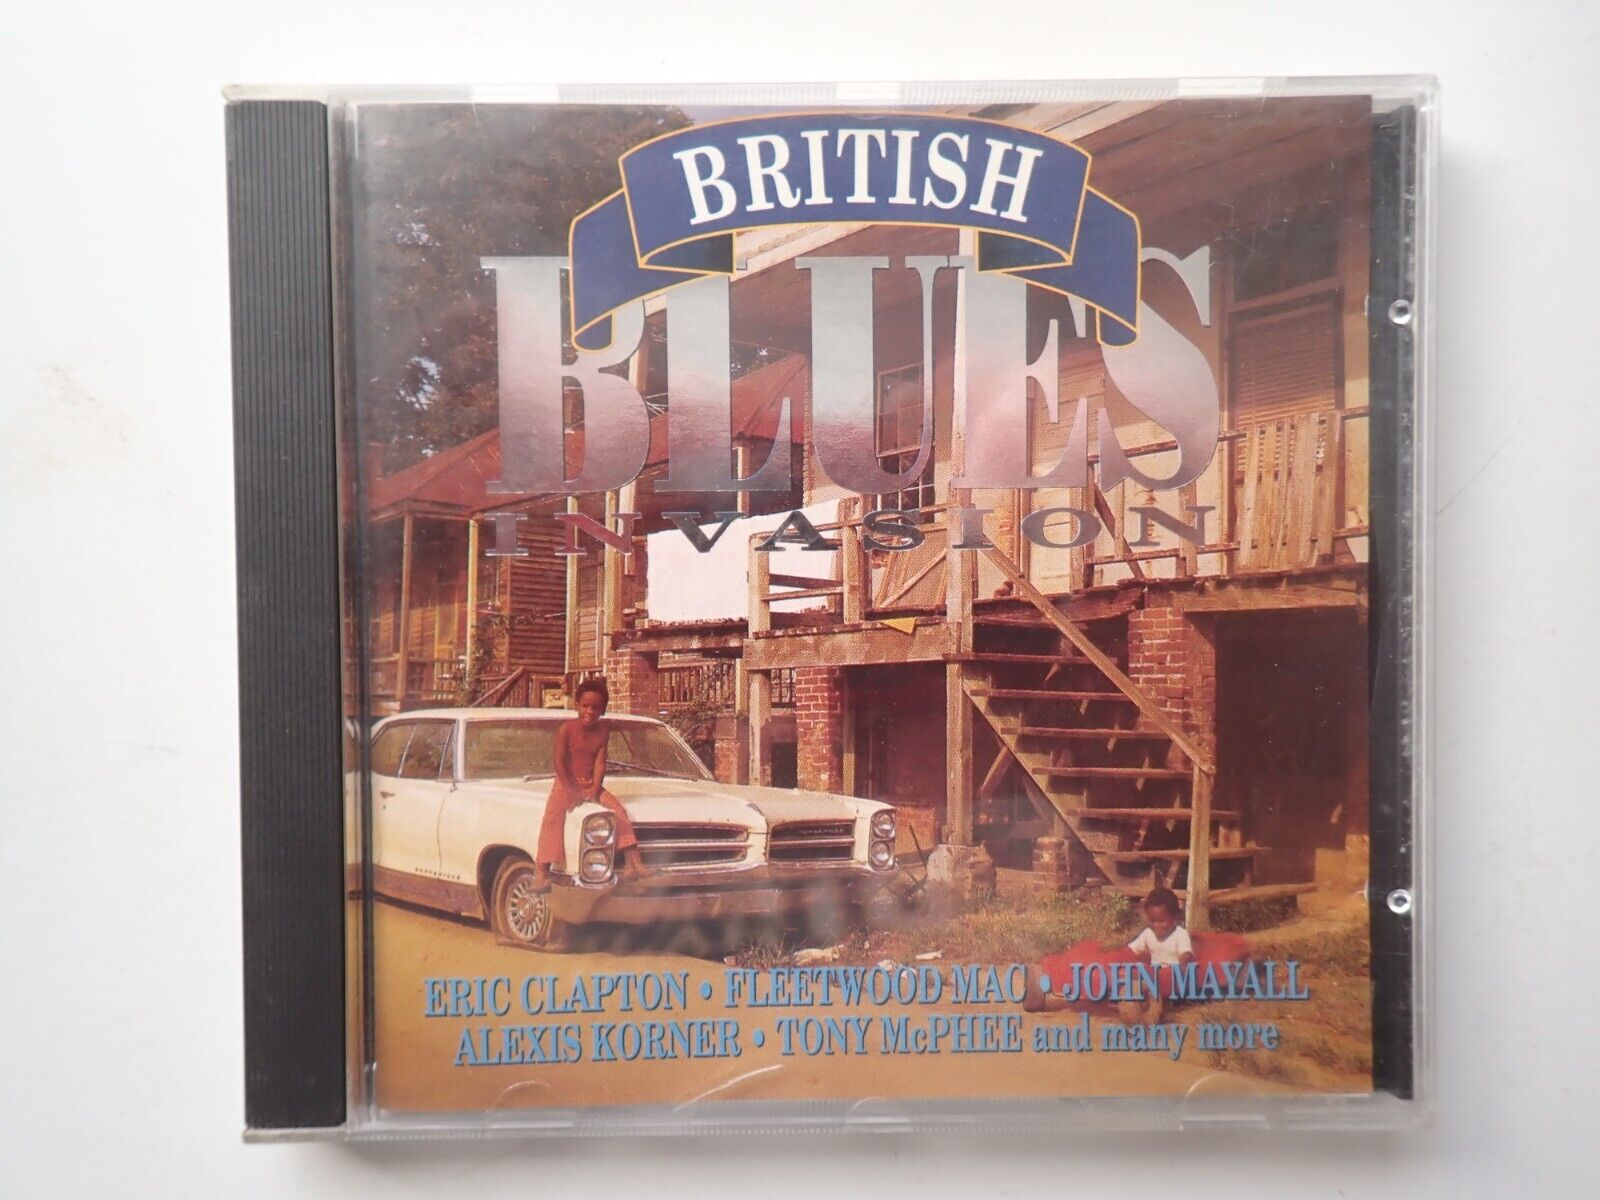 BRITISH BLUES INVASION - VARIOUS ARTISTS CD 1993 EU